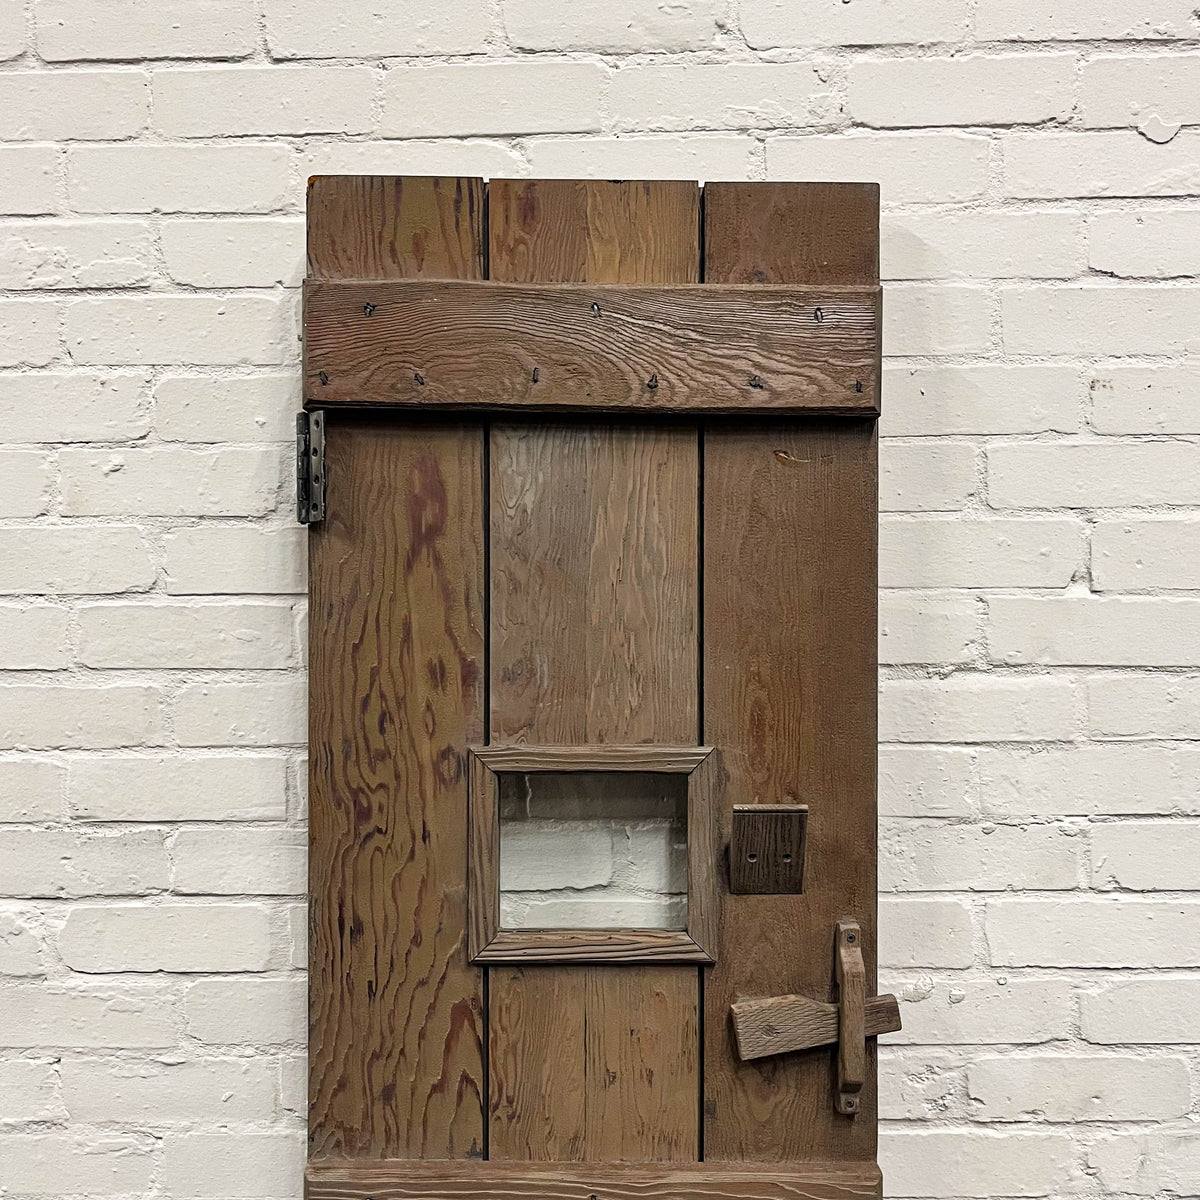 Antique Victorian Glazed Latch Door - 197cm x 52.5cm | The Architectural Forum